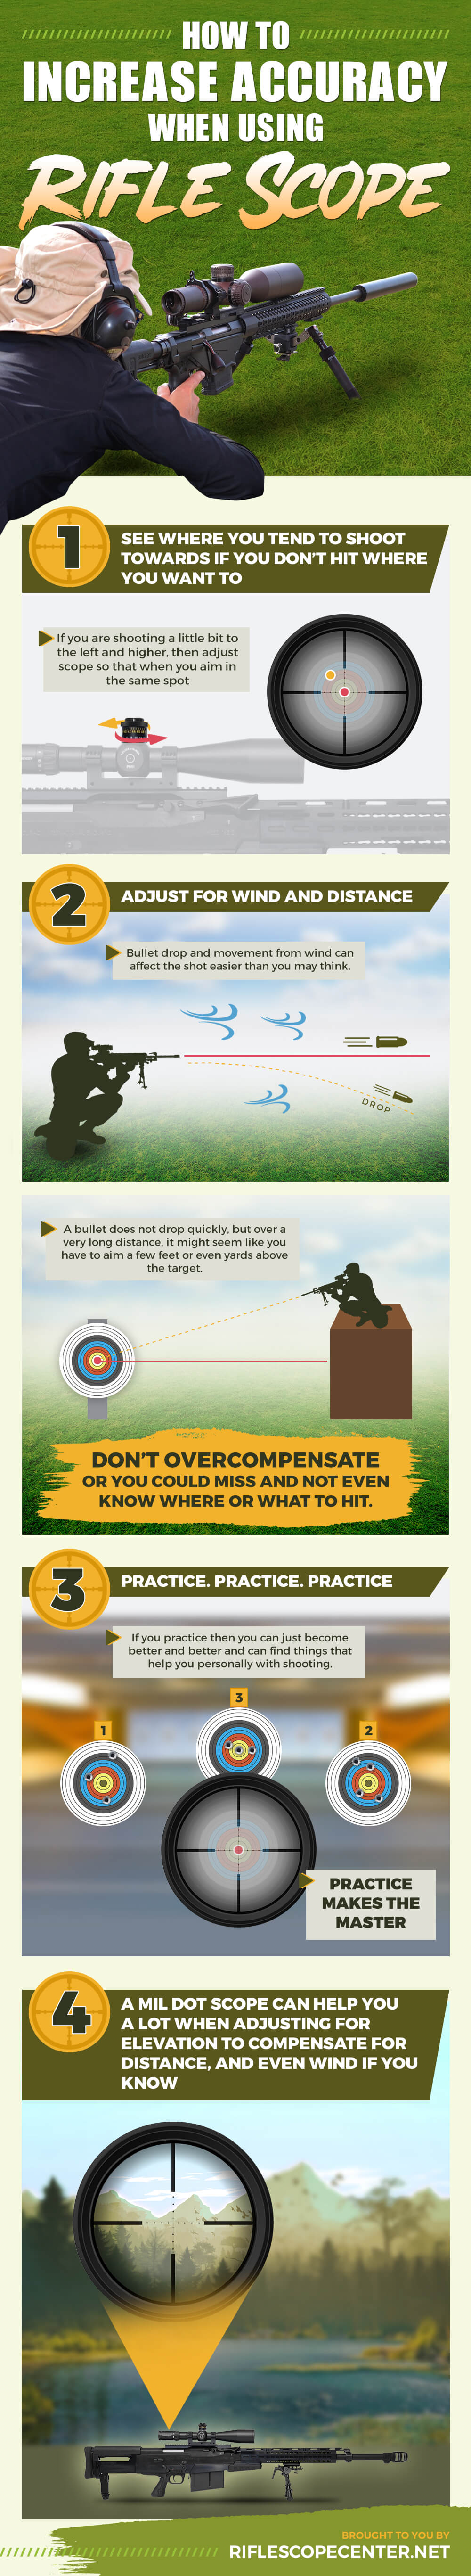 Rifle Scope Infographic